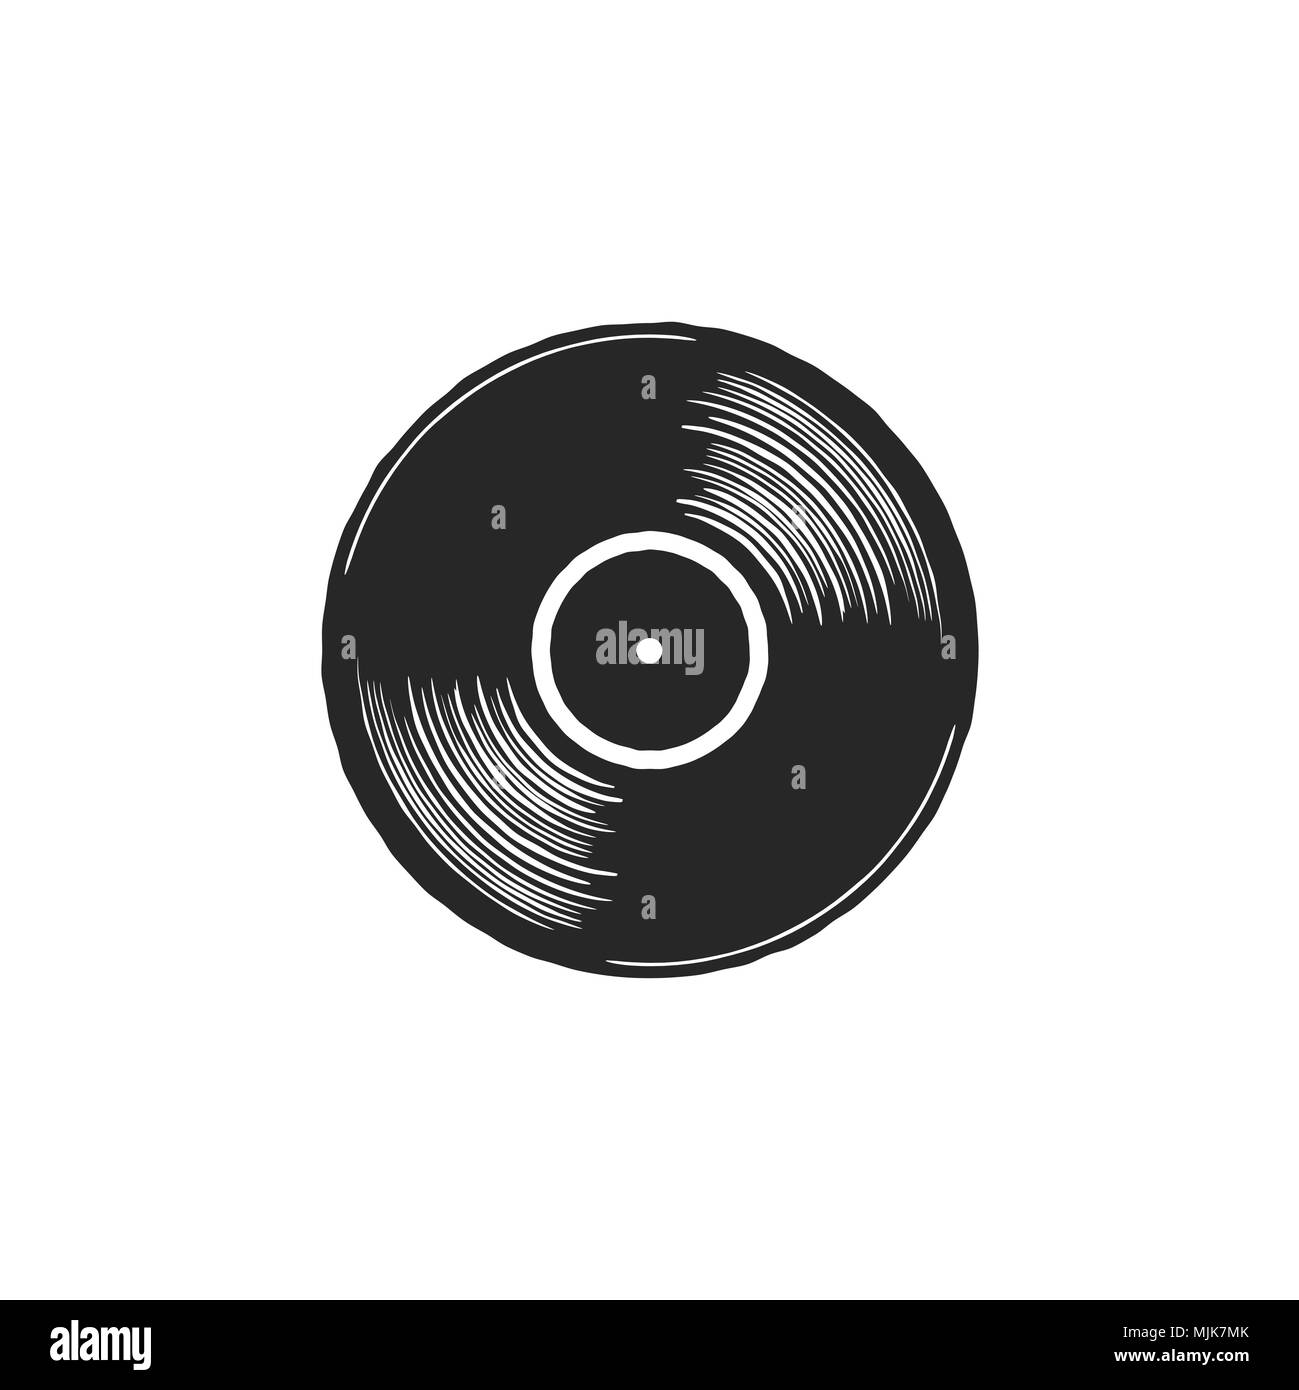 Disco lp de vinilo de gramófono con etiqueta blanca vacía. disco de álbum  de larga duración musical negro aislado sobre fondo blanco. ilustración  vectorial realista 3d